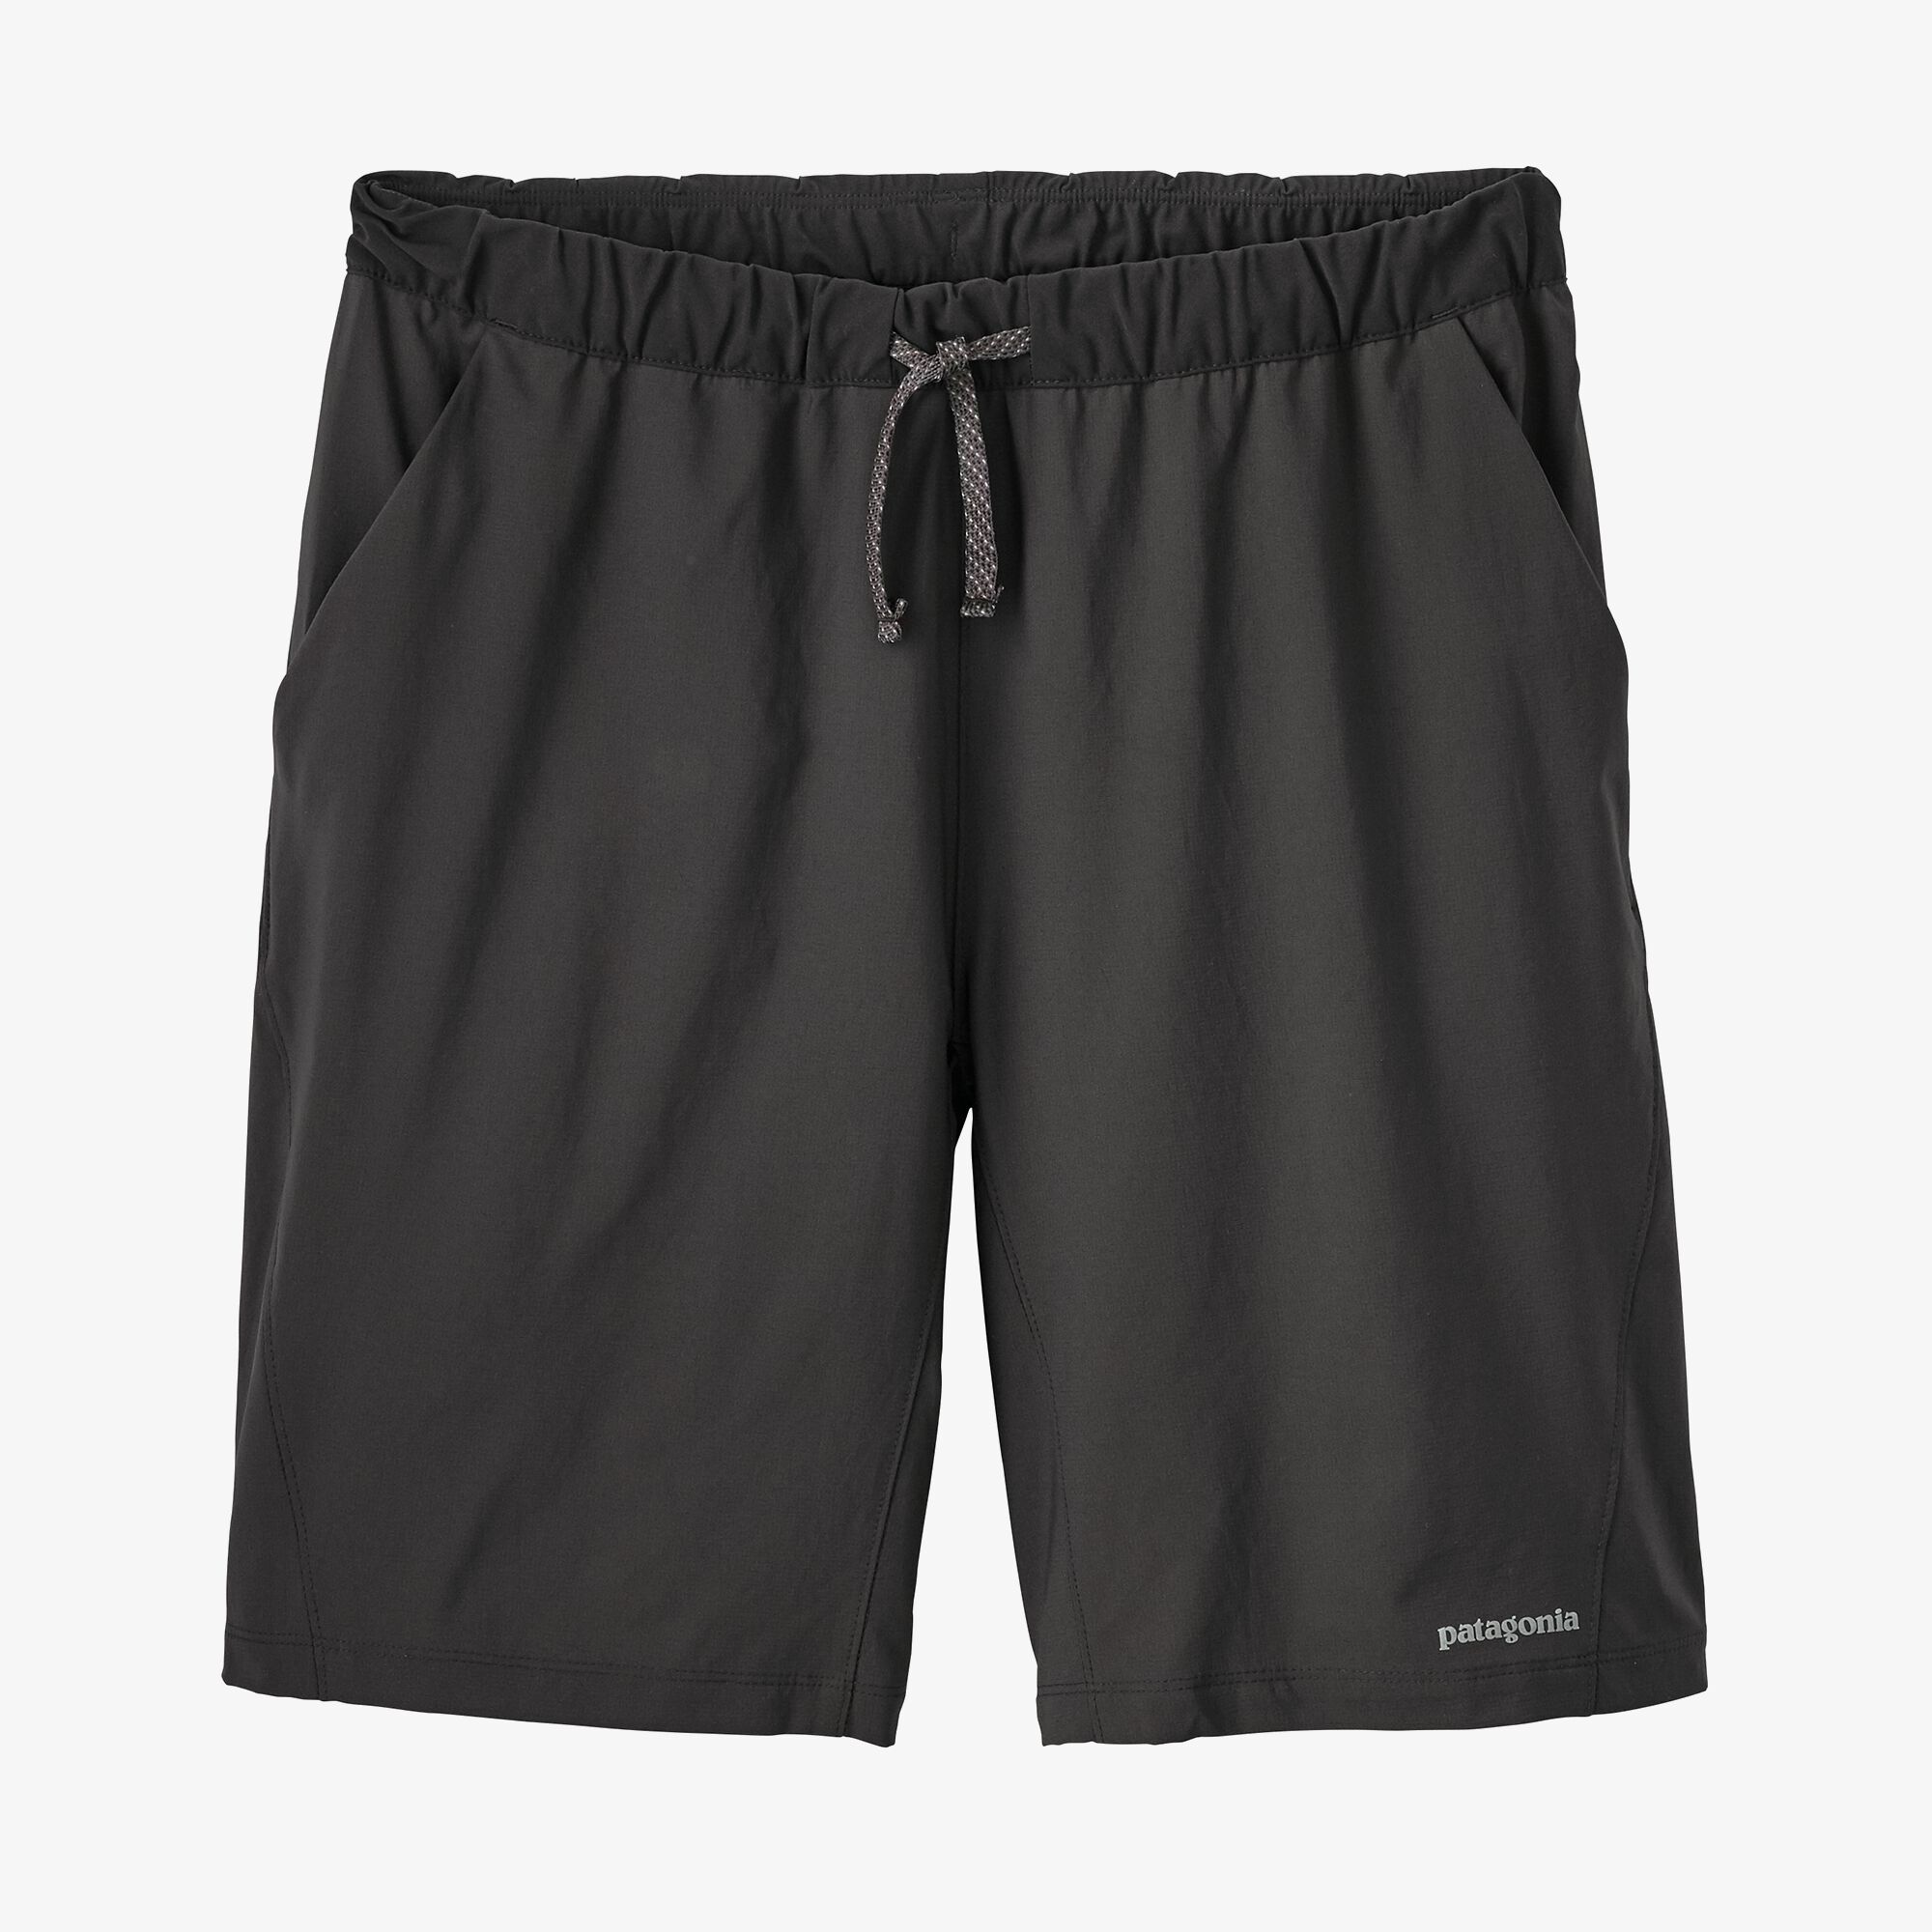 Patagonia Men's Terrebonne Shorts - Recycled Polyester, Black / L